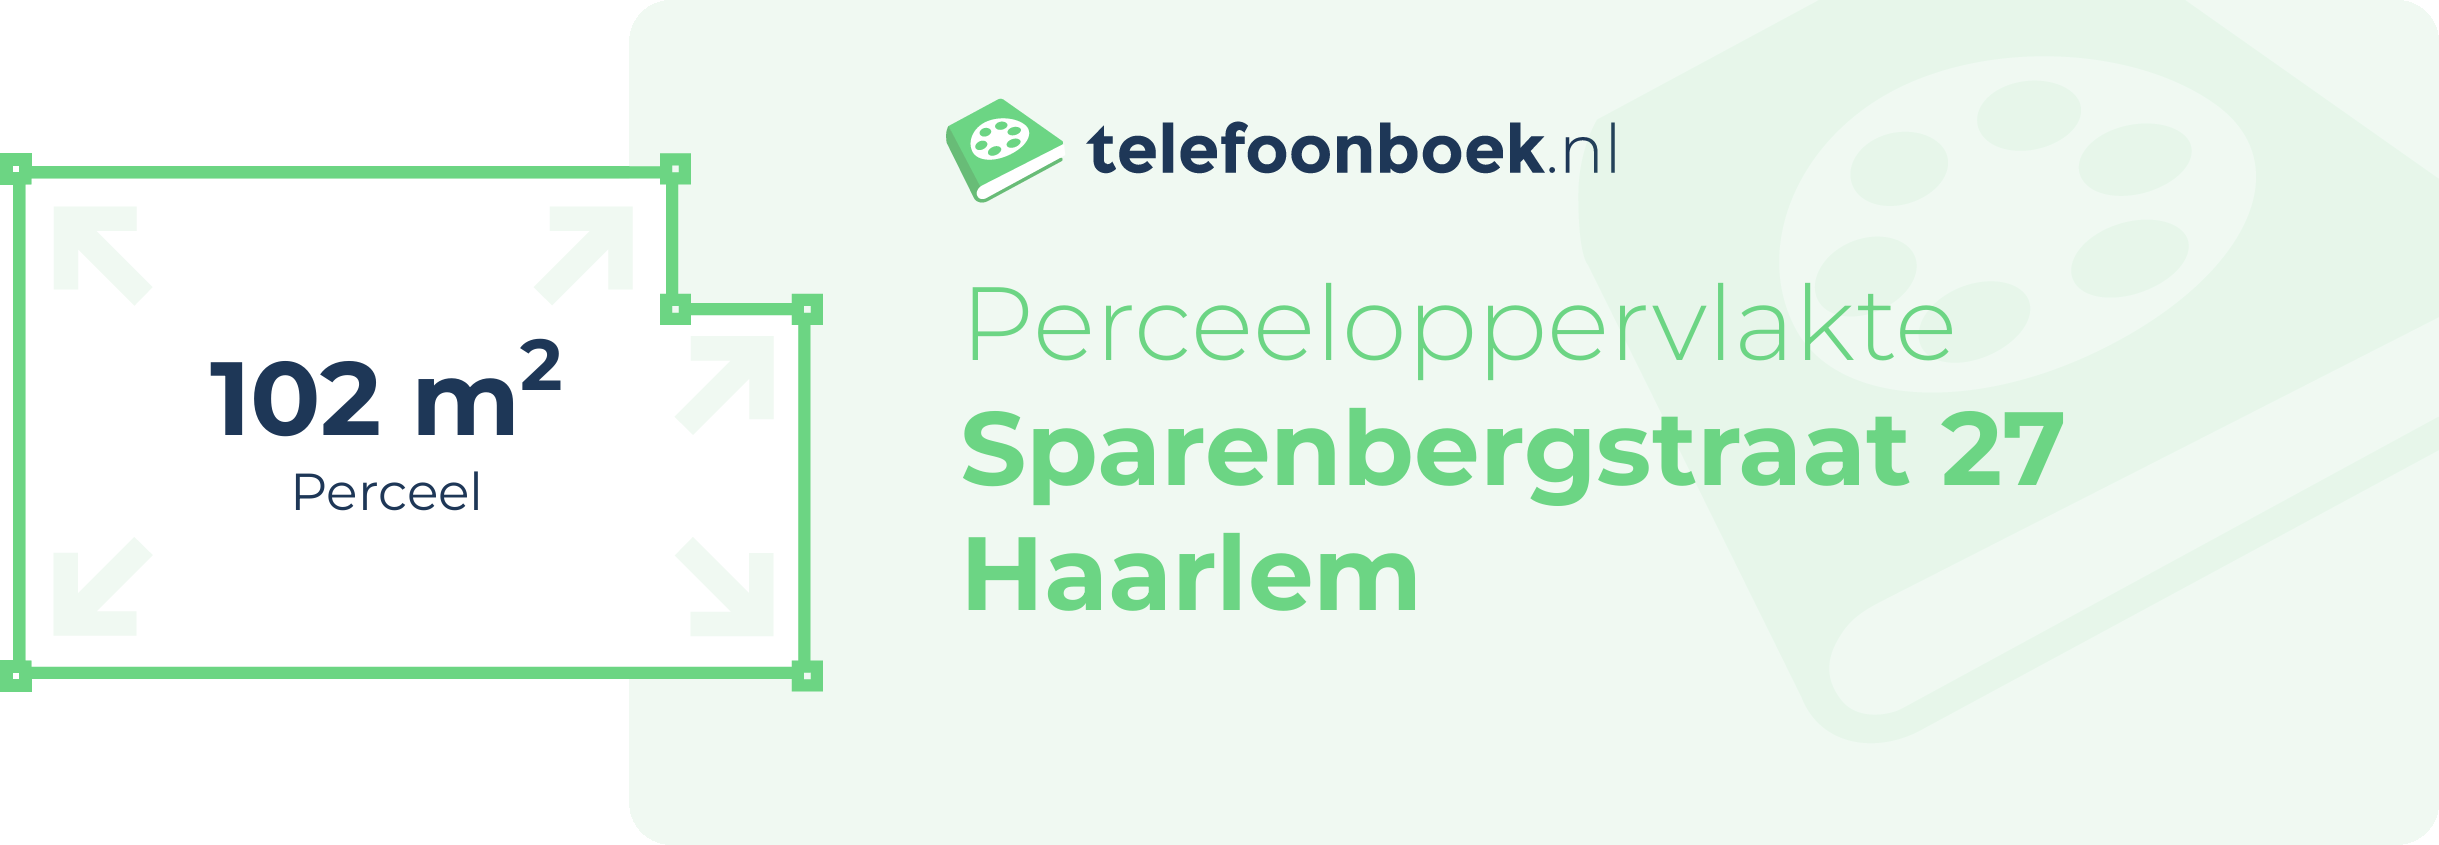 Perceeloppervlakte Sparenbergstraat 27 Haarlem